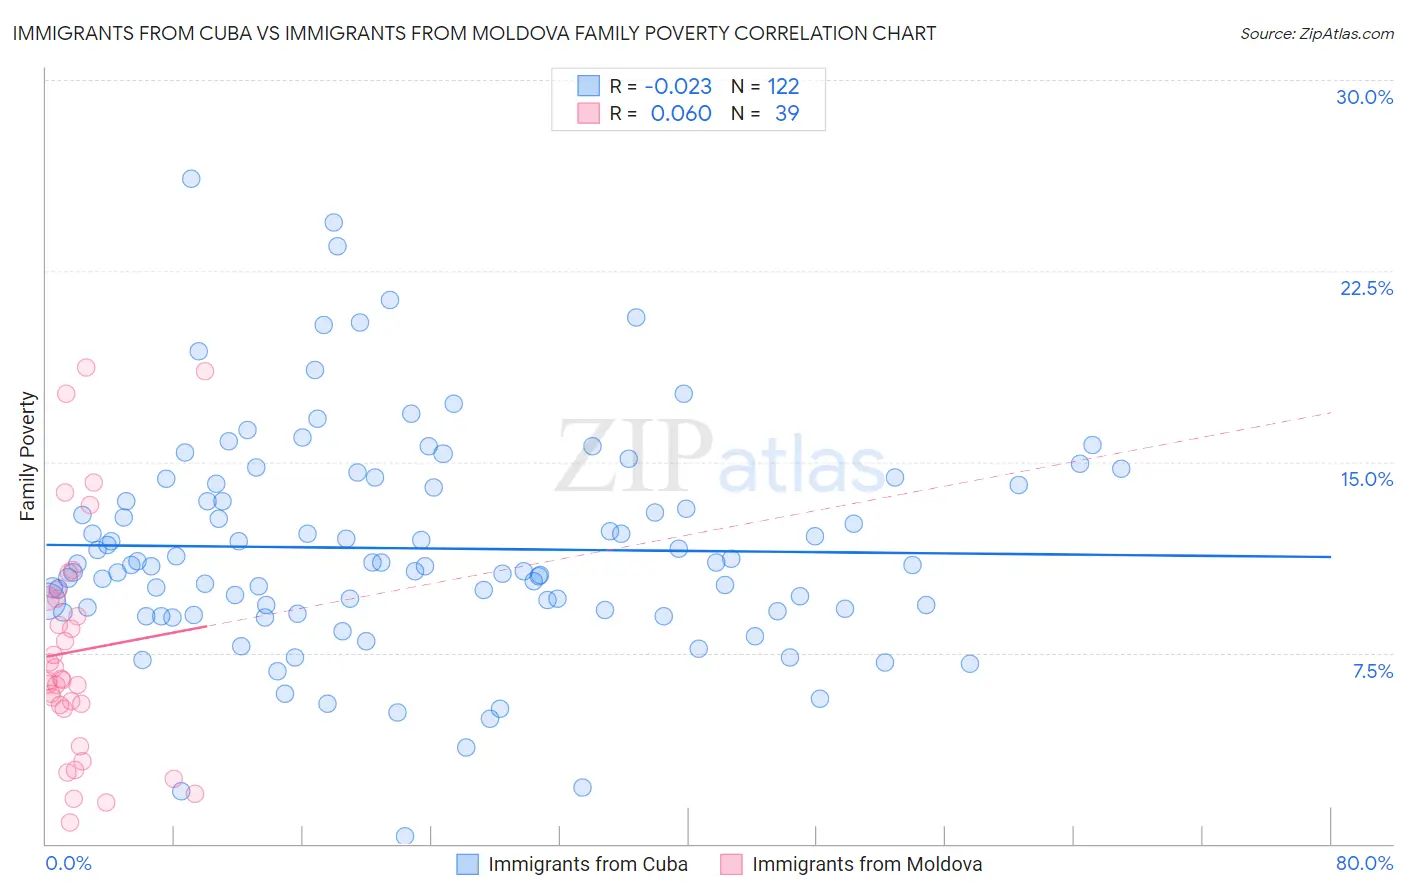 Immigrants from Cuba vs Immigrants from Moldova Family Poverty